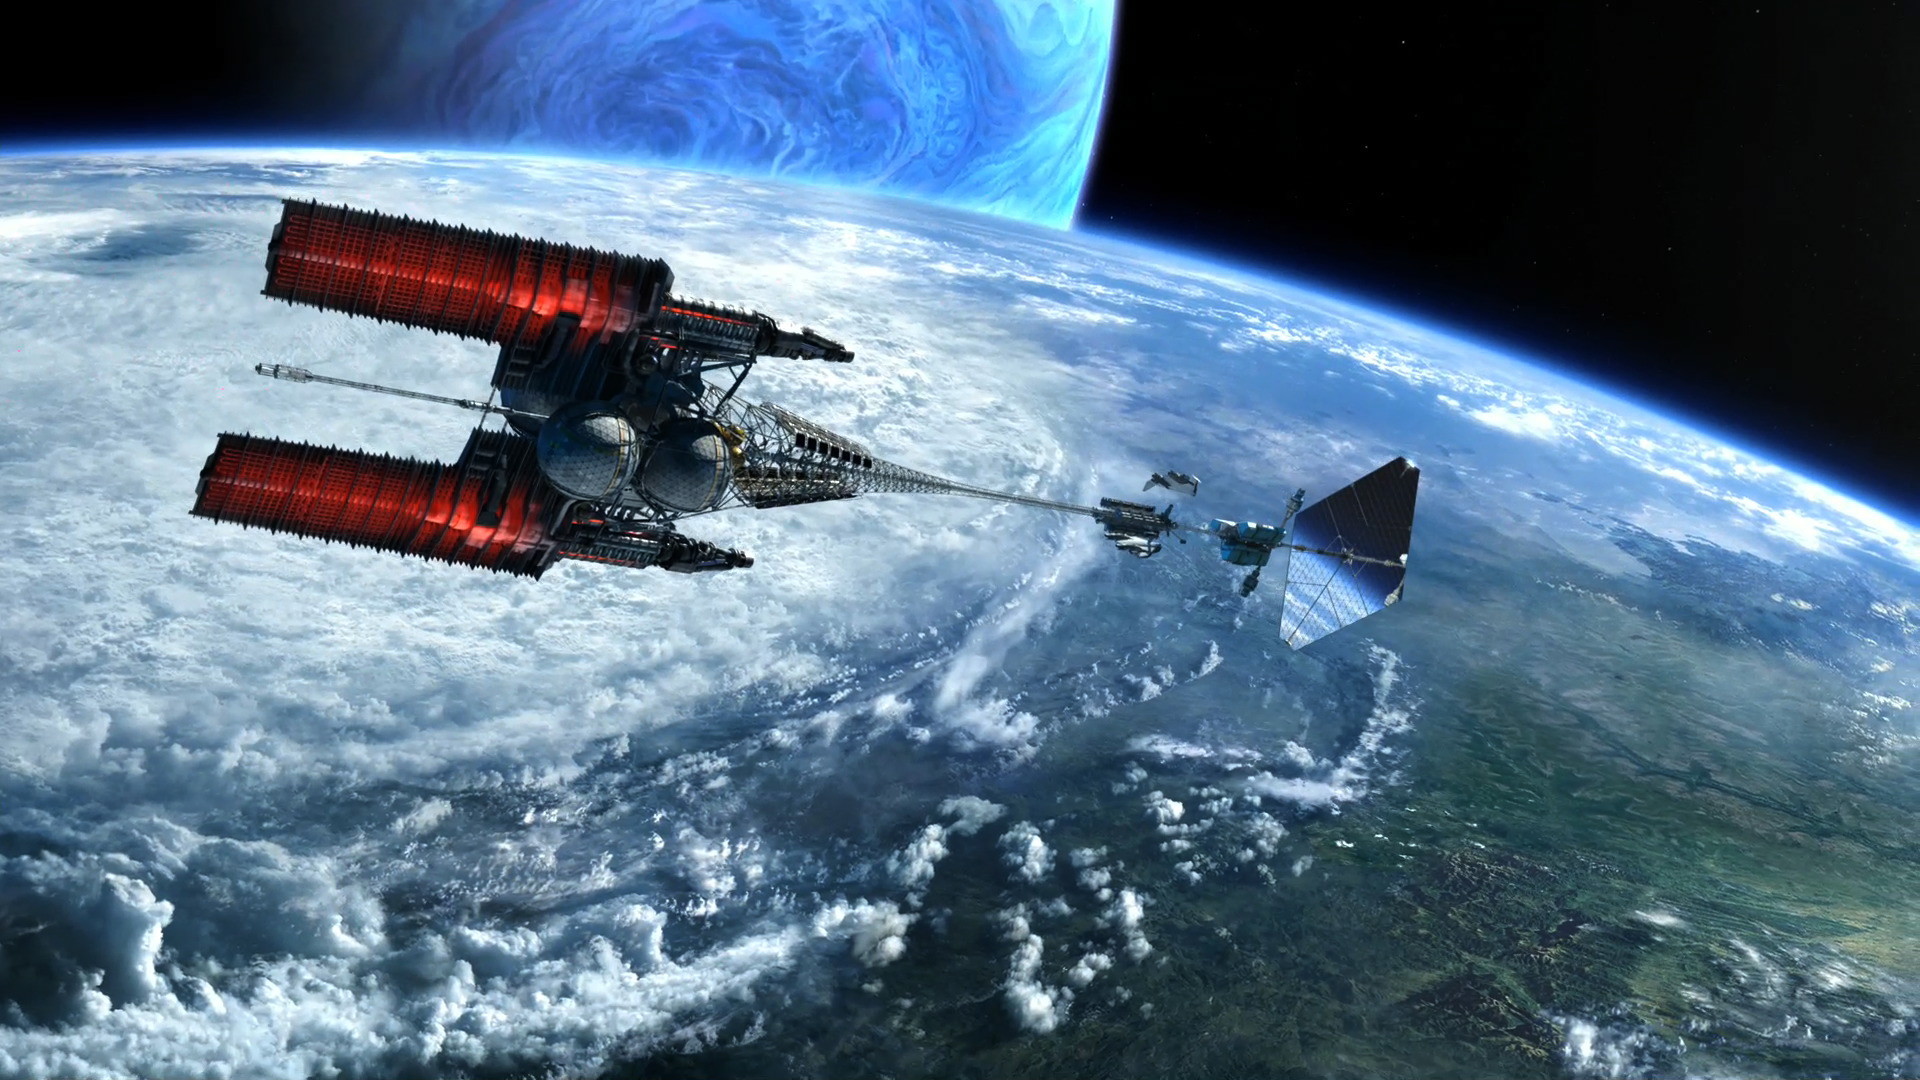 wallpaper imperial star destroyer in atmospher. Next image â. Preview  Spaceship over Pandora orbit